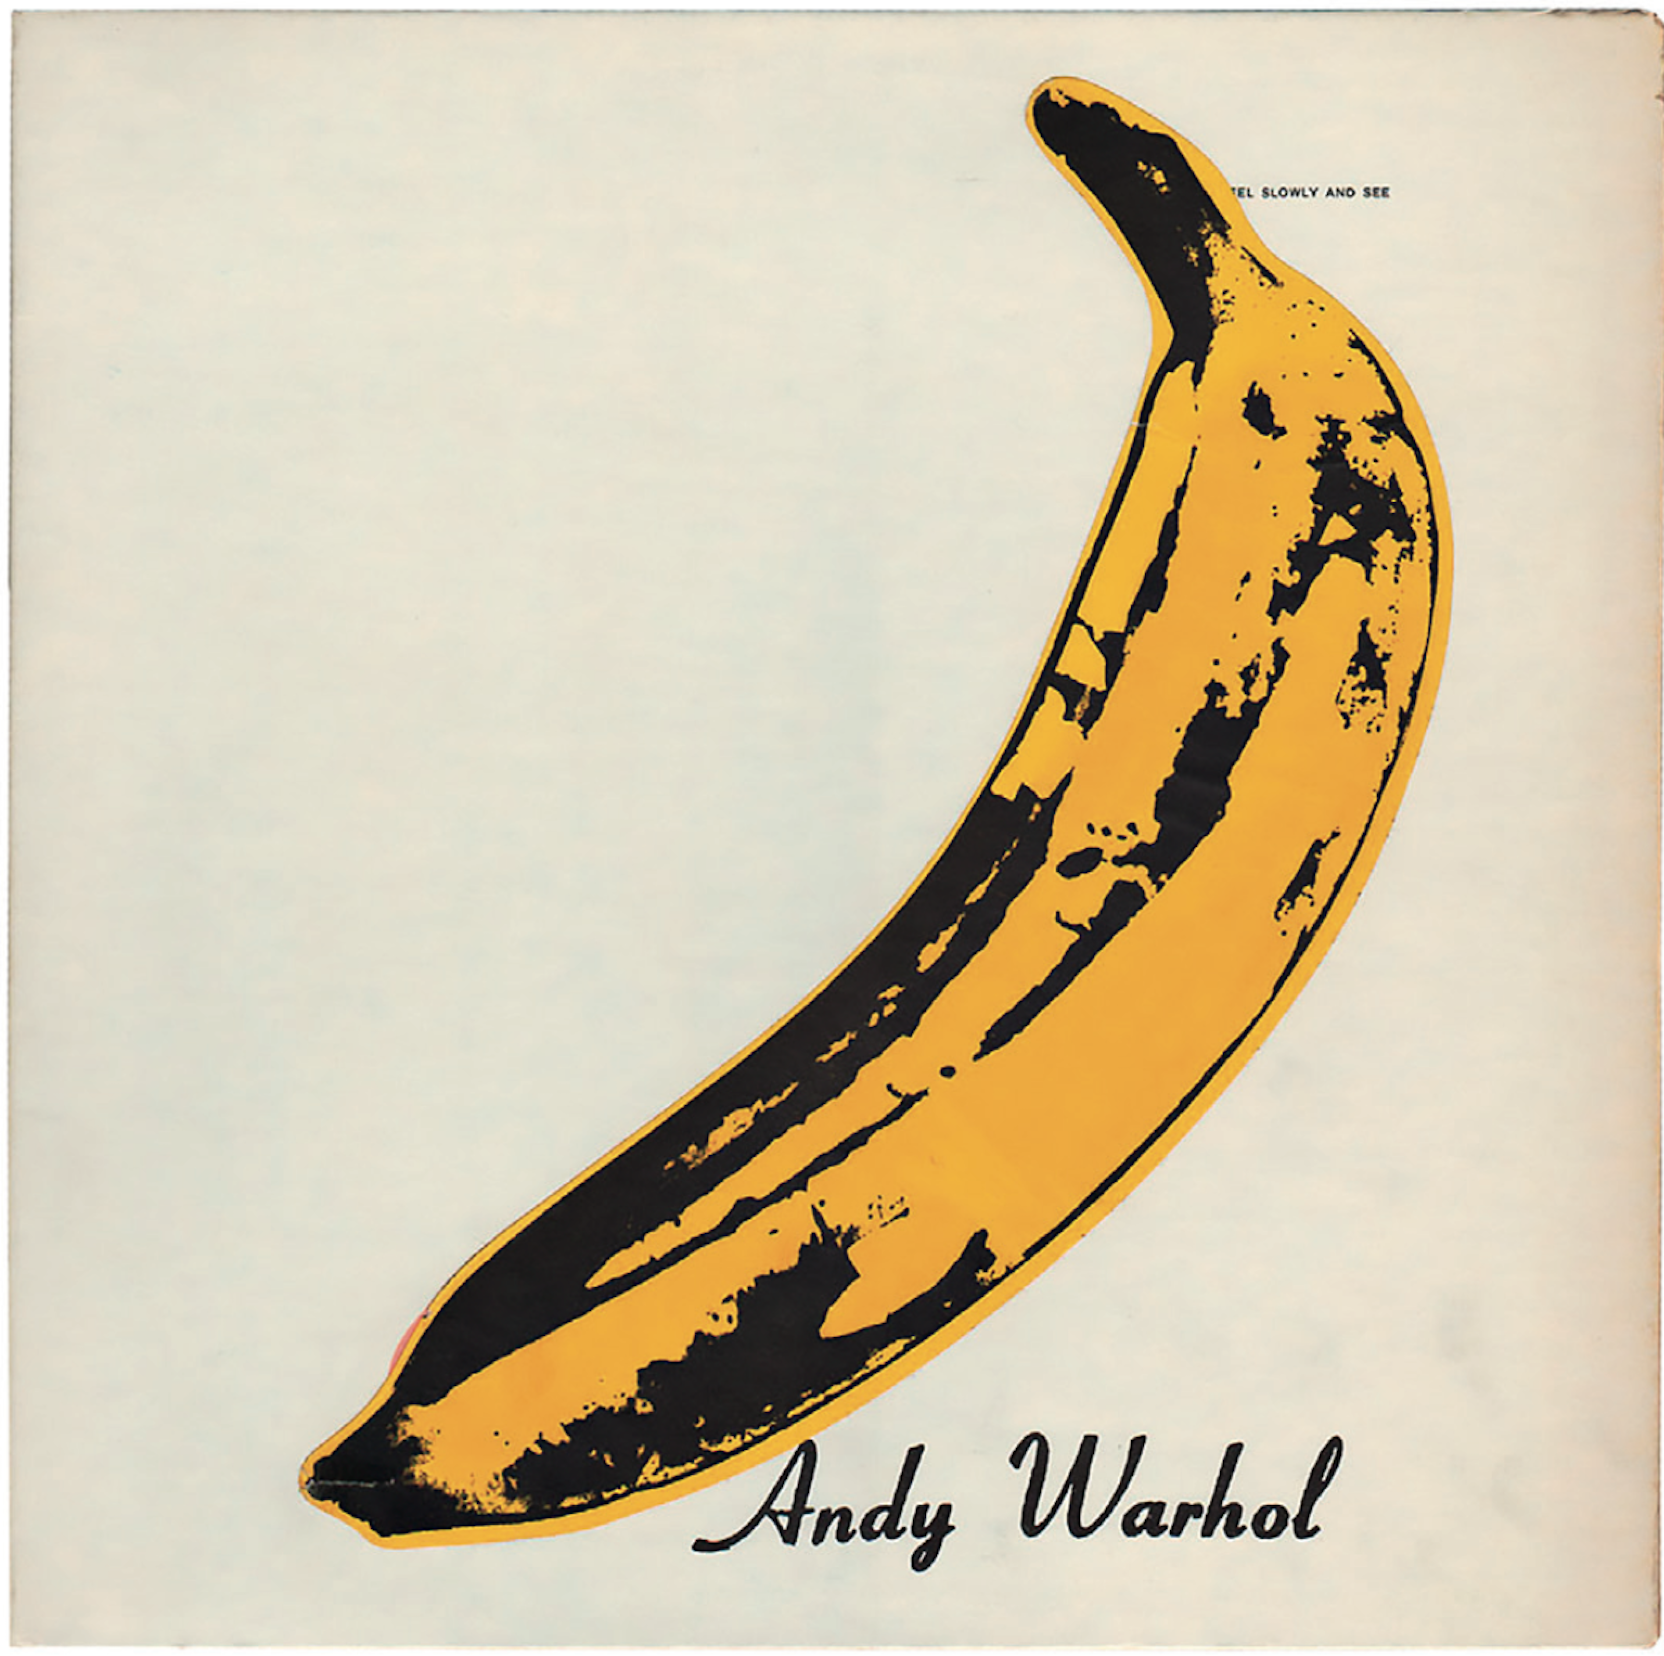 Album cover for ‘The Velvet Underground & Nico,’ 1967